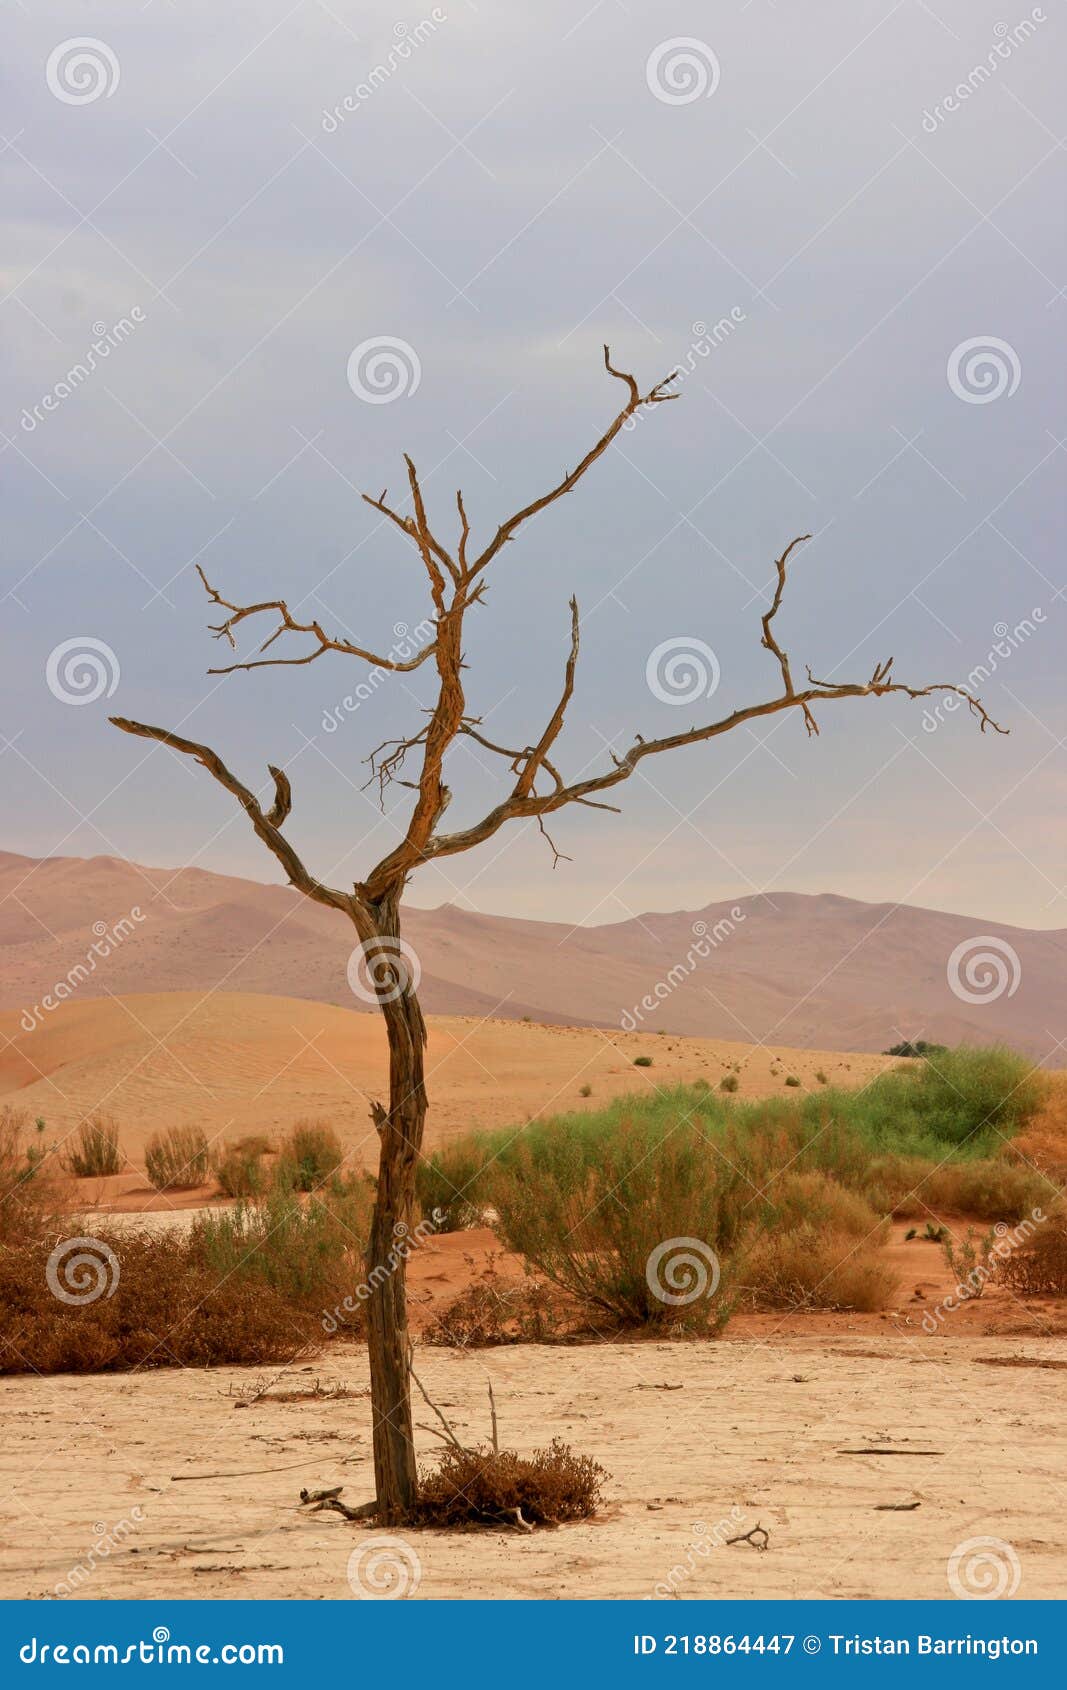 hidden vlei dead tree in lansdscape namib-naukluft national park, namibia